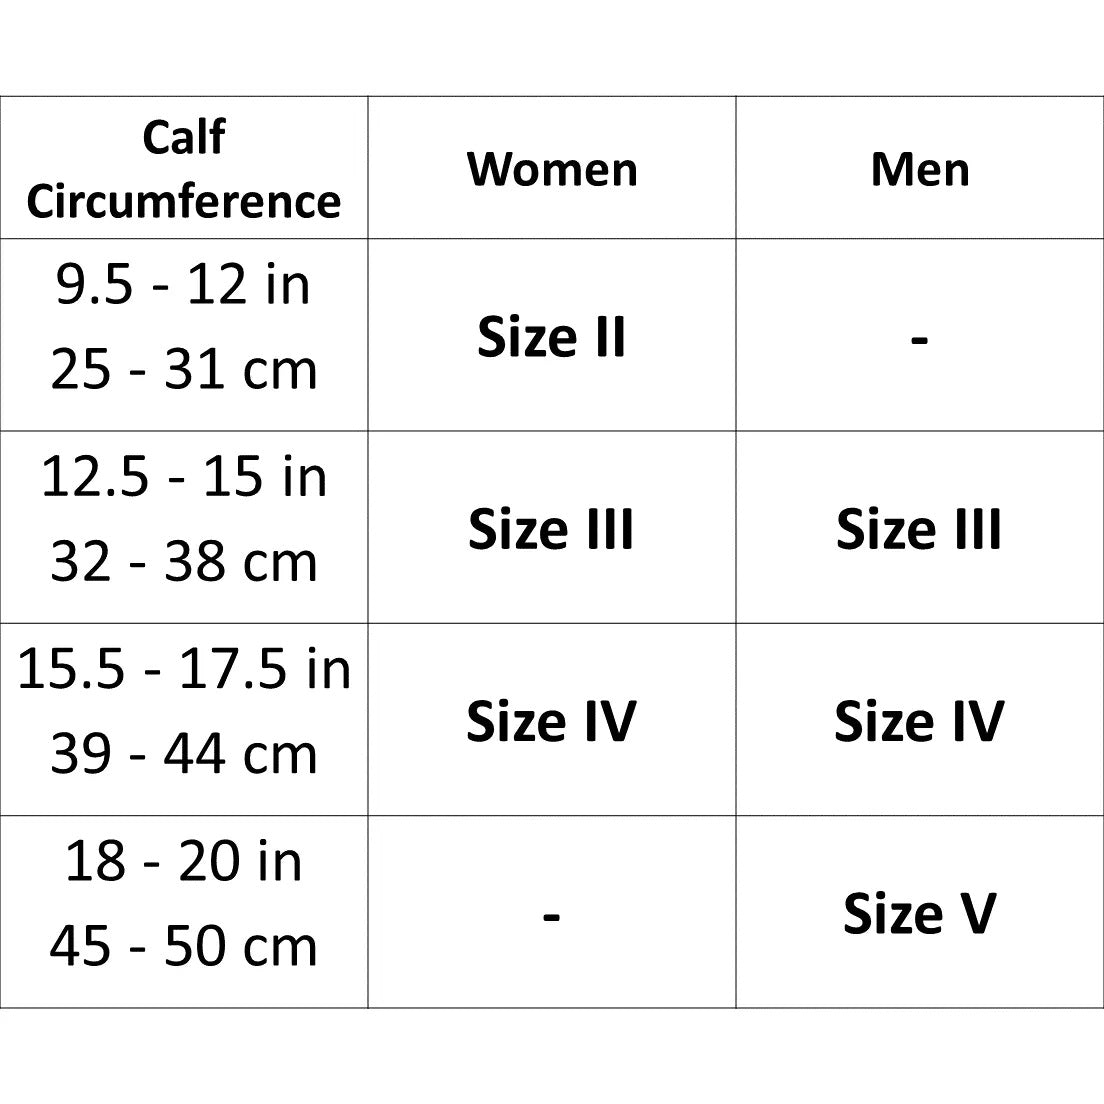 Women ULTRALIGHT CEP Knee High 20-30 mmHg Compression Socks – Calzuro Canada